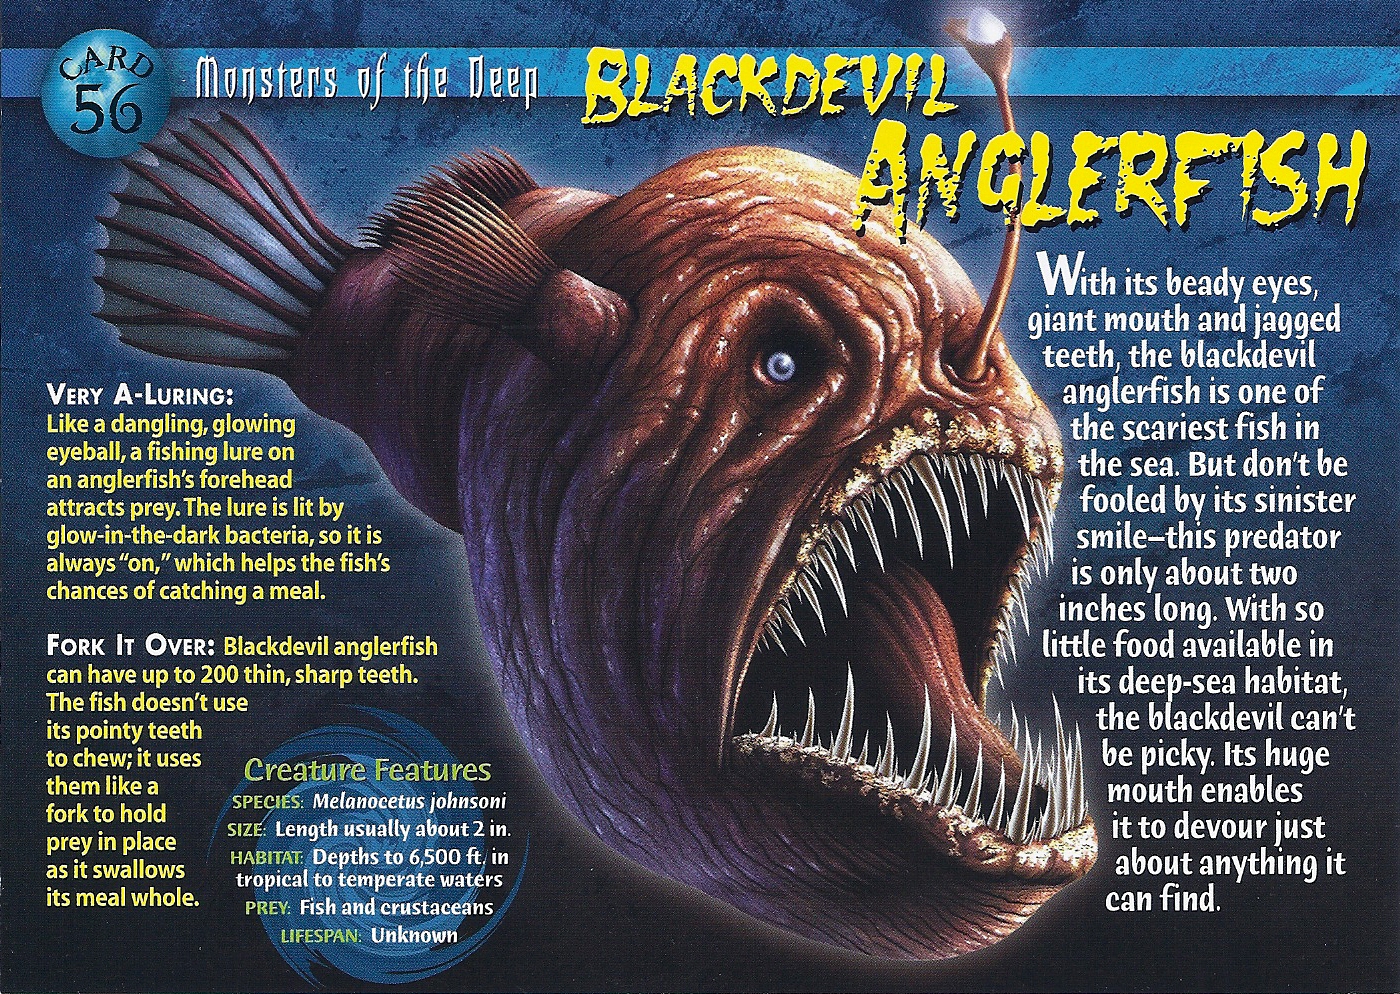 Blackdevil Anglerfish Wierd N Wild Creatures Wiki Fandom Powered By